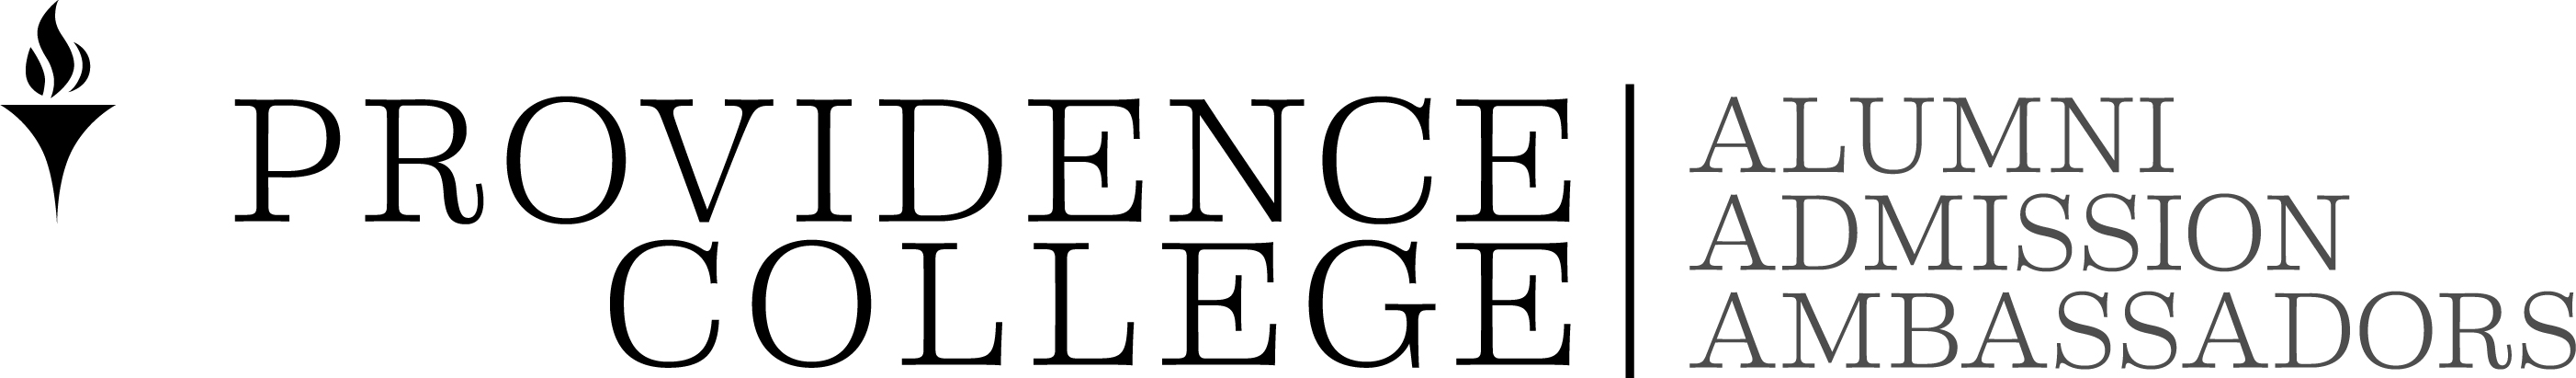 Providence College Alumni Admission Ambassadors